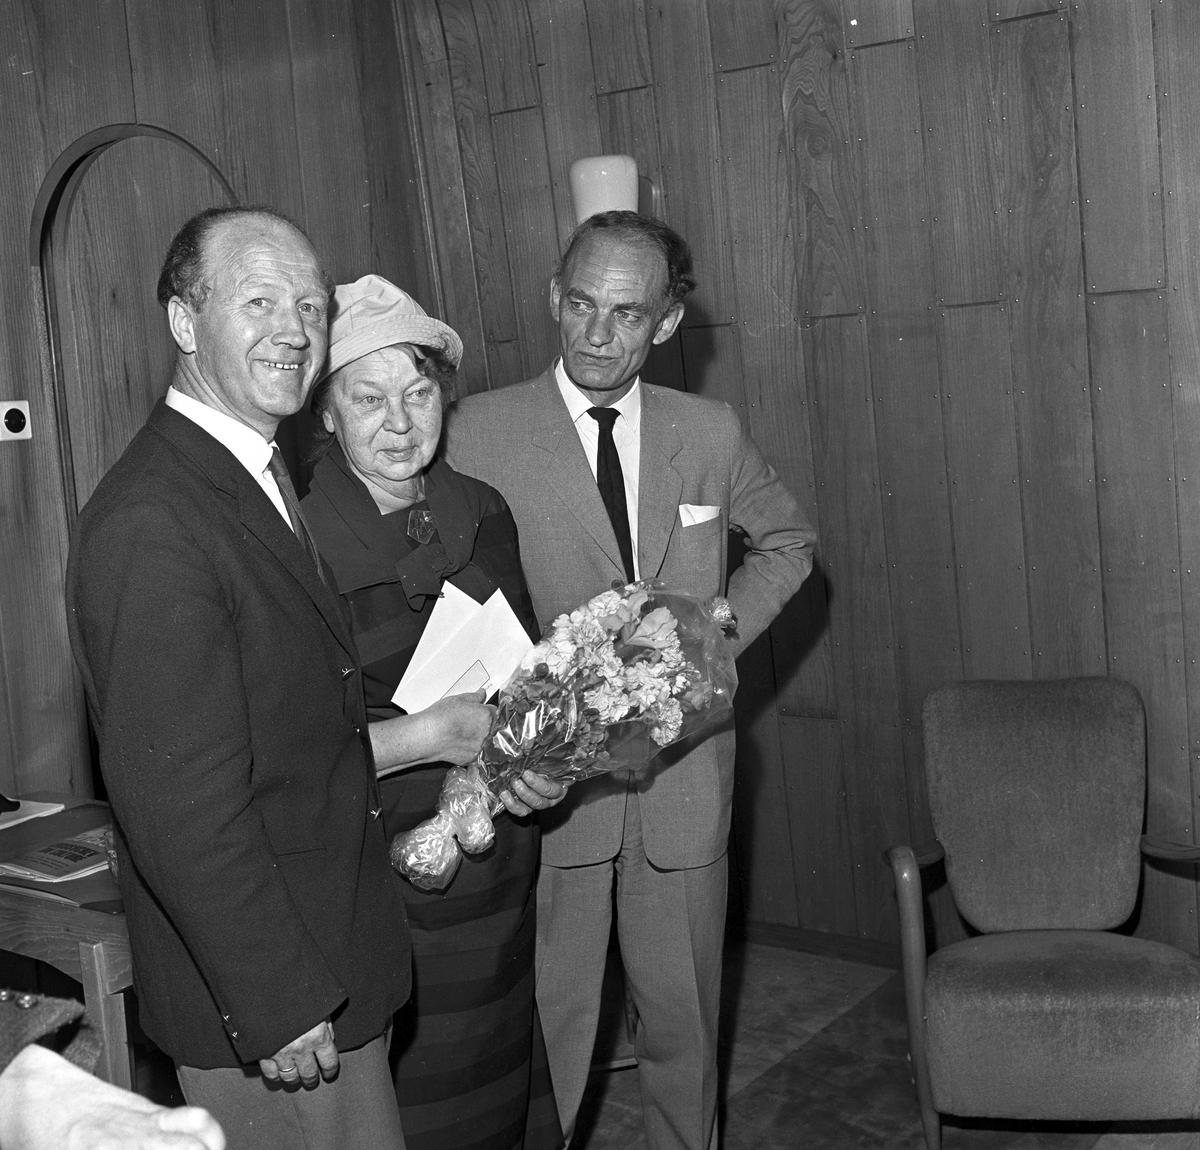 Aslaug Vaa mottar pris i anl.Haldis Moren Vesaas i kringkastingen.
Fotografert 1963.